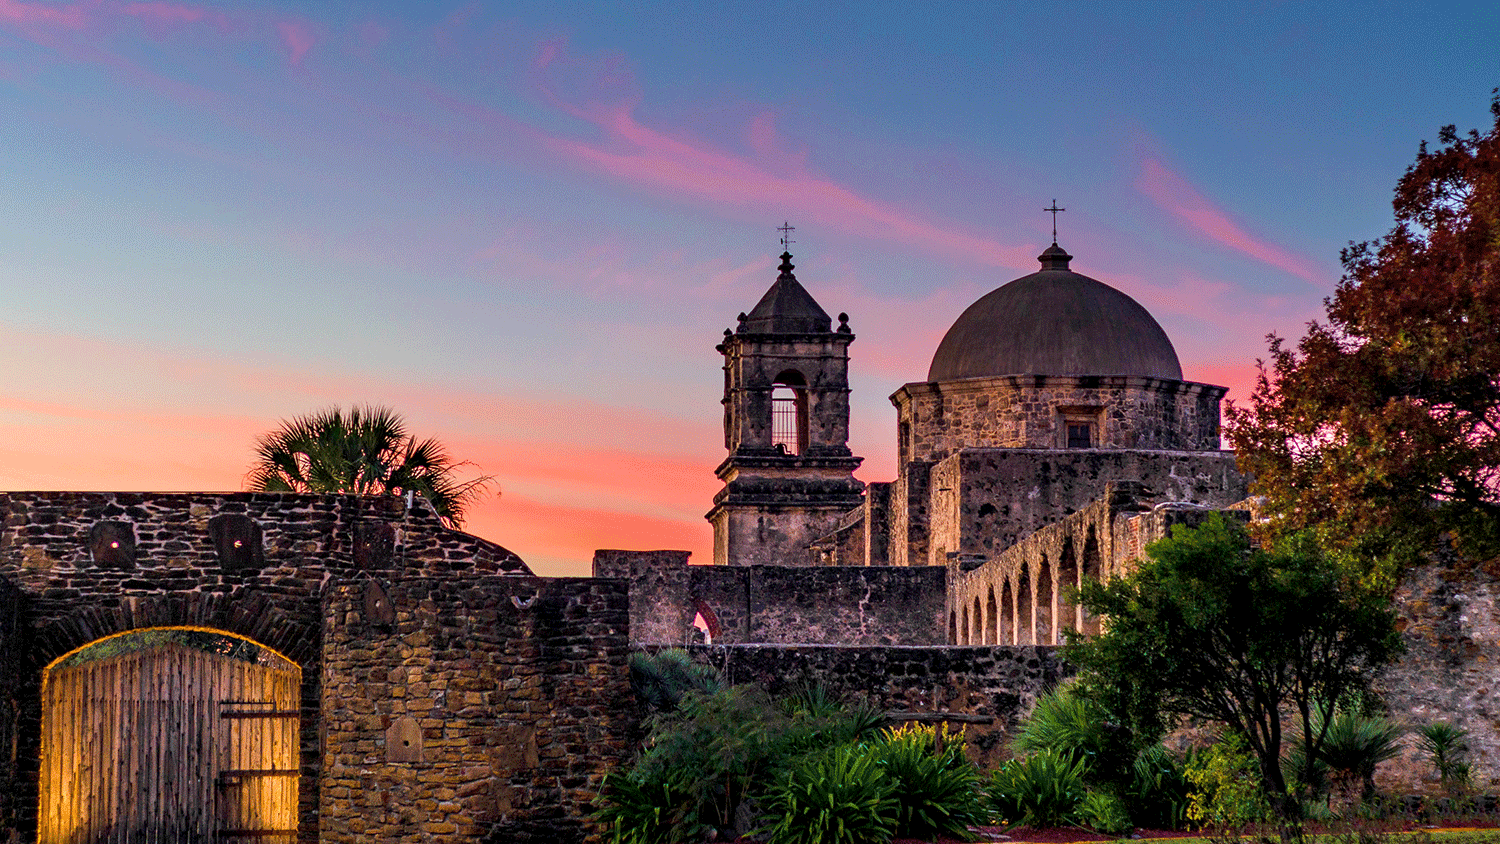 San Antonio Mission at Sunset